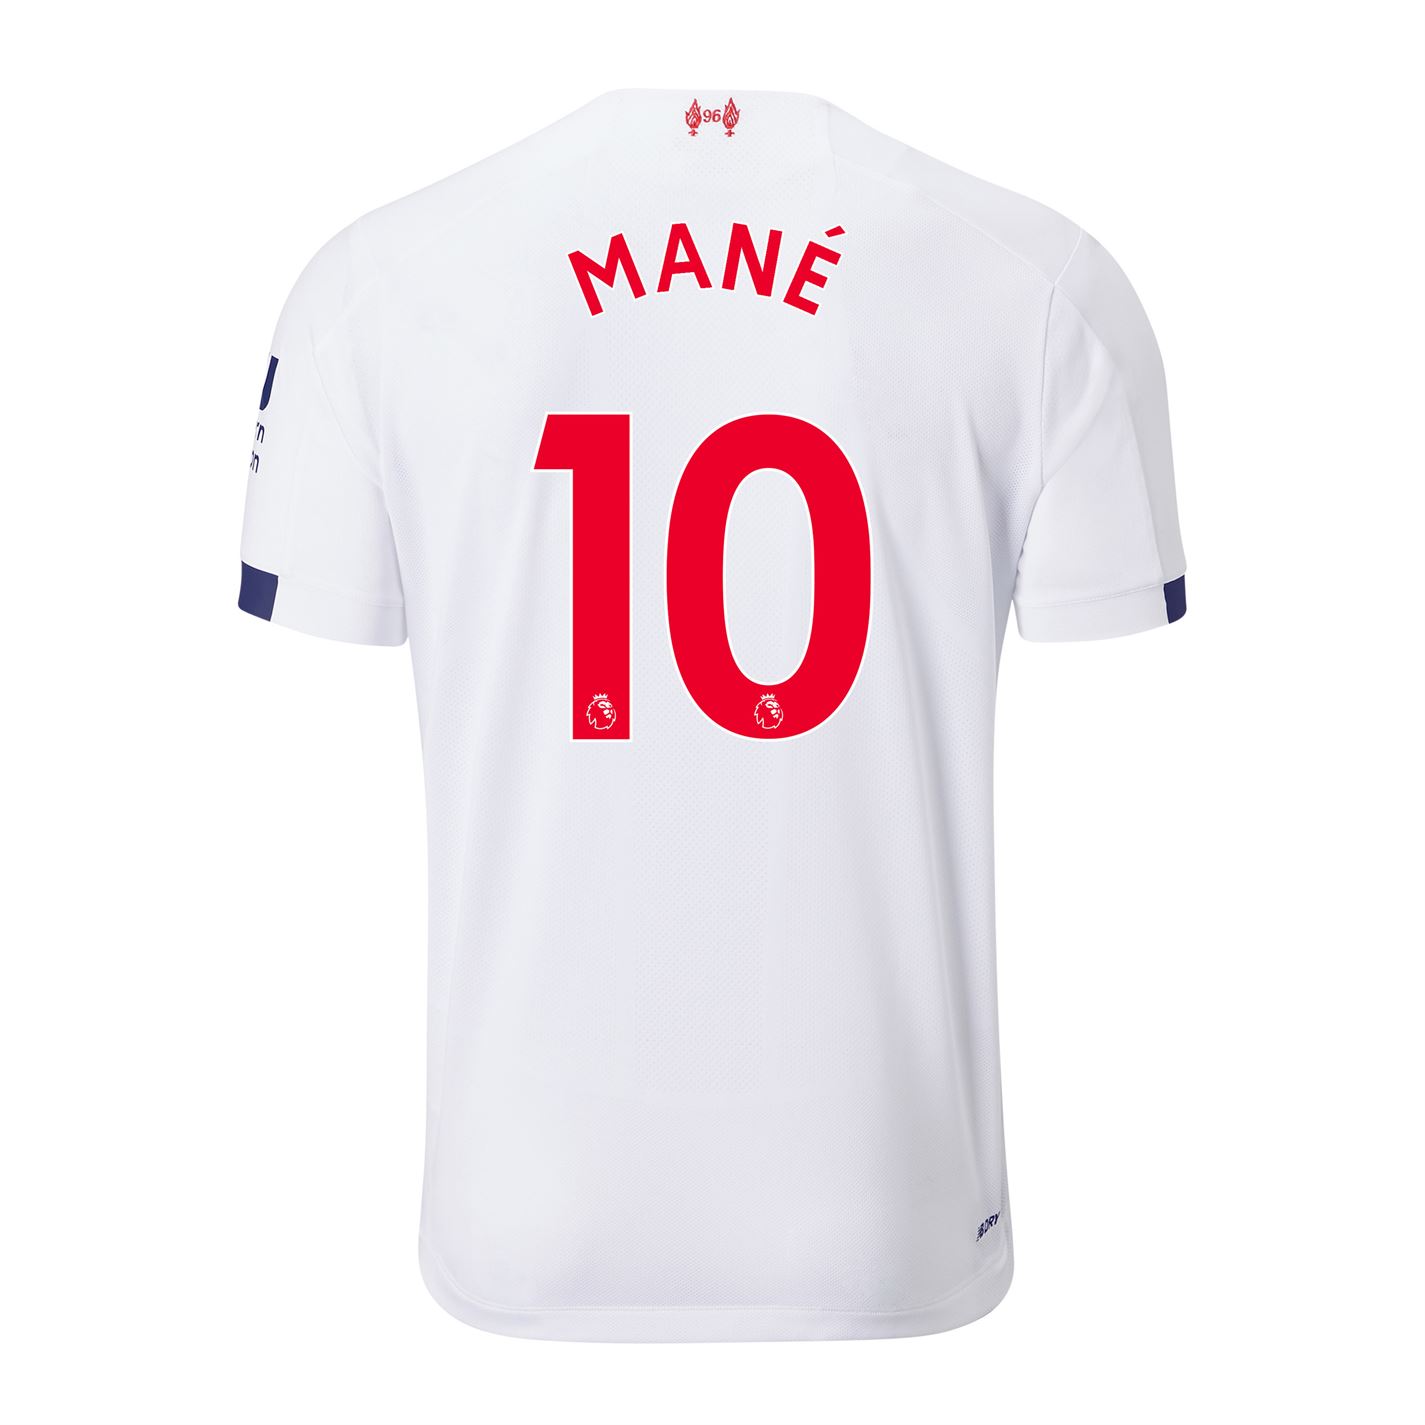 New Balance Liverpool Sadio Mane Away Shirt 2019 2020